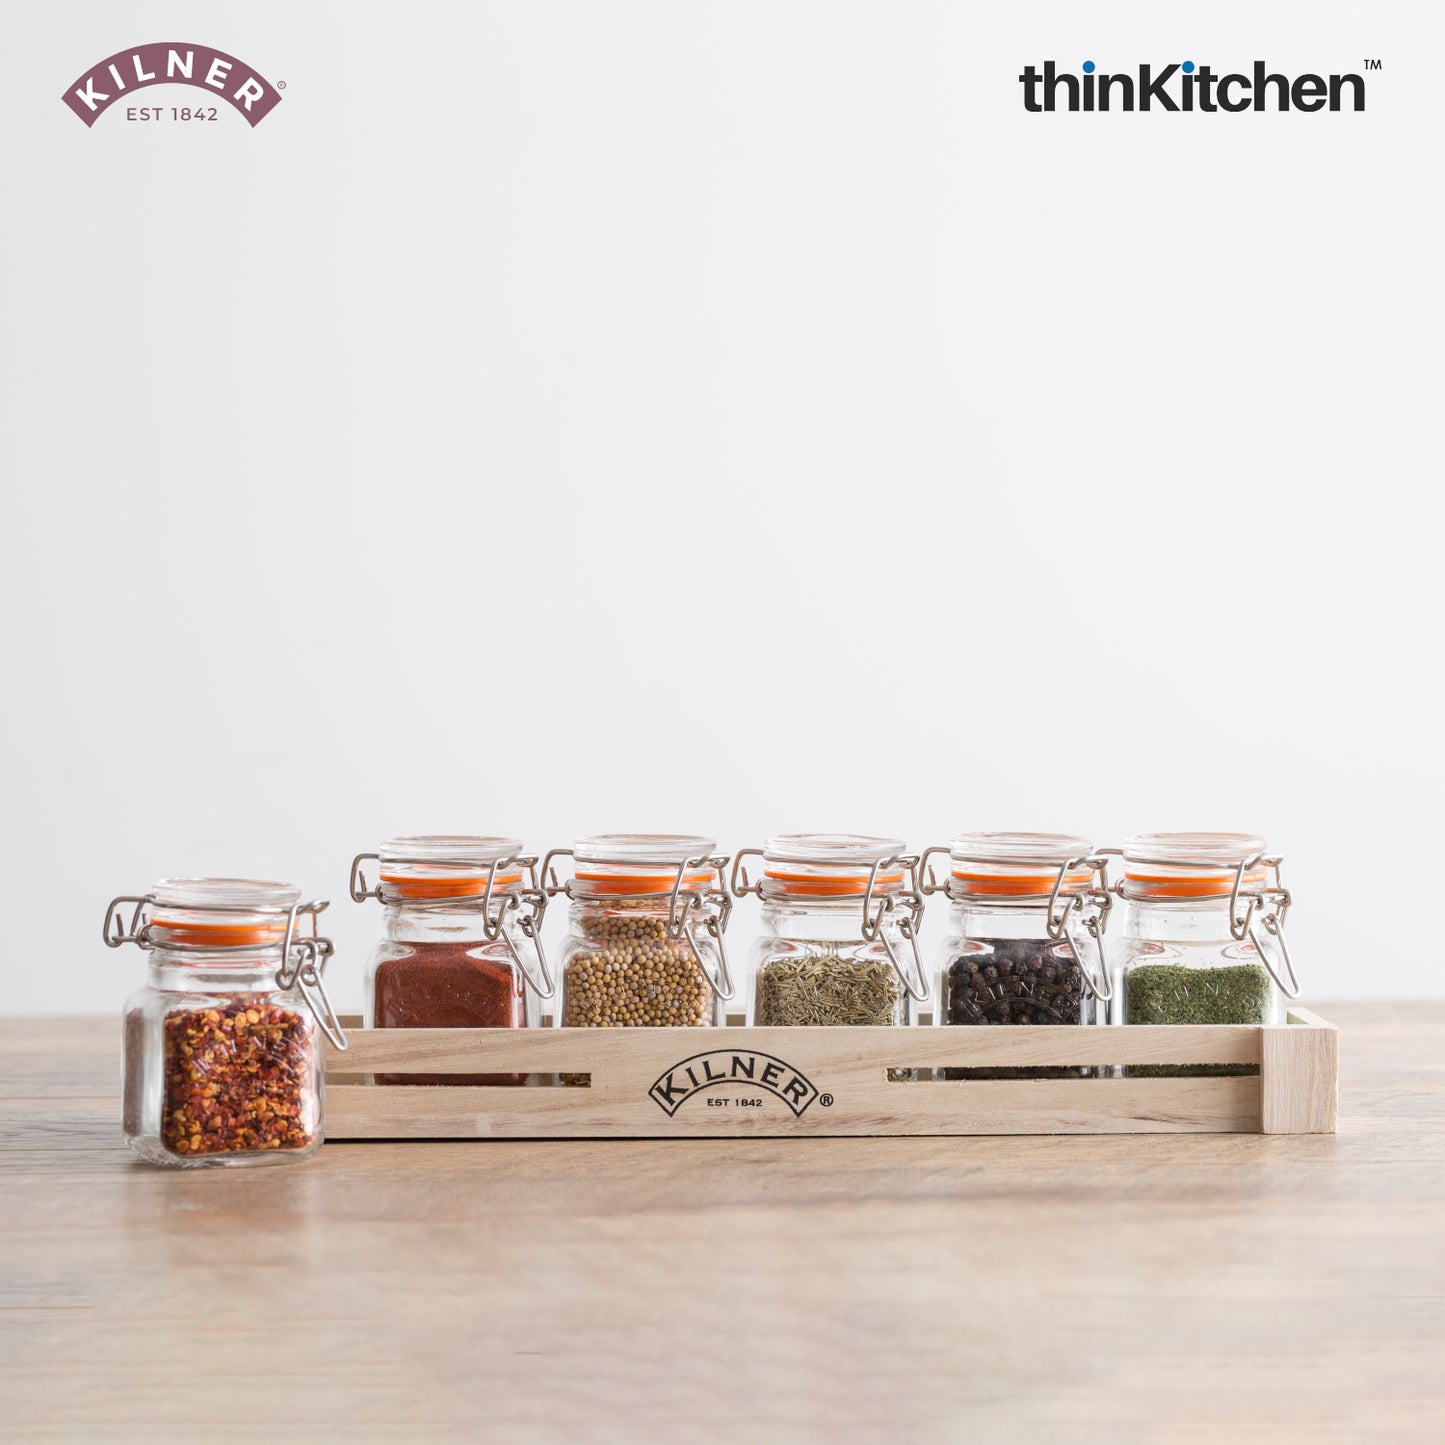 Kilner Glass Clip Top Spice Jars, Set of 6, 70ml each